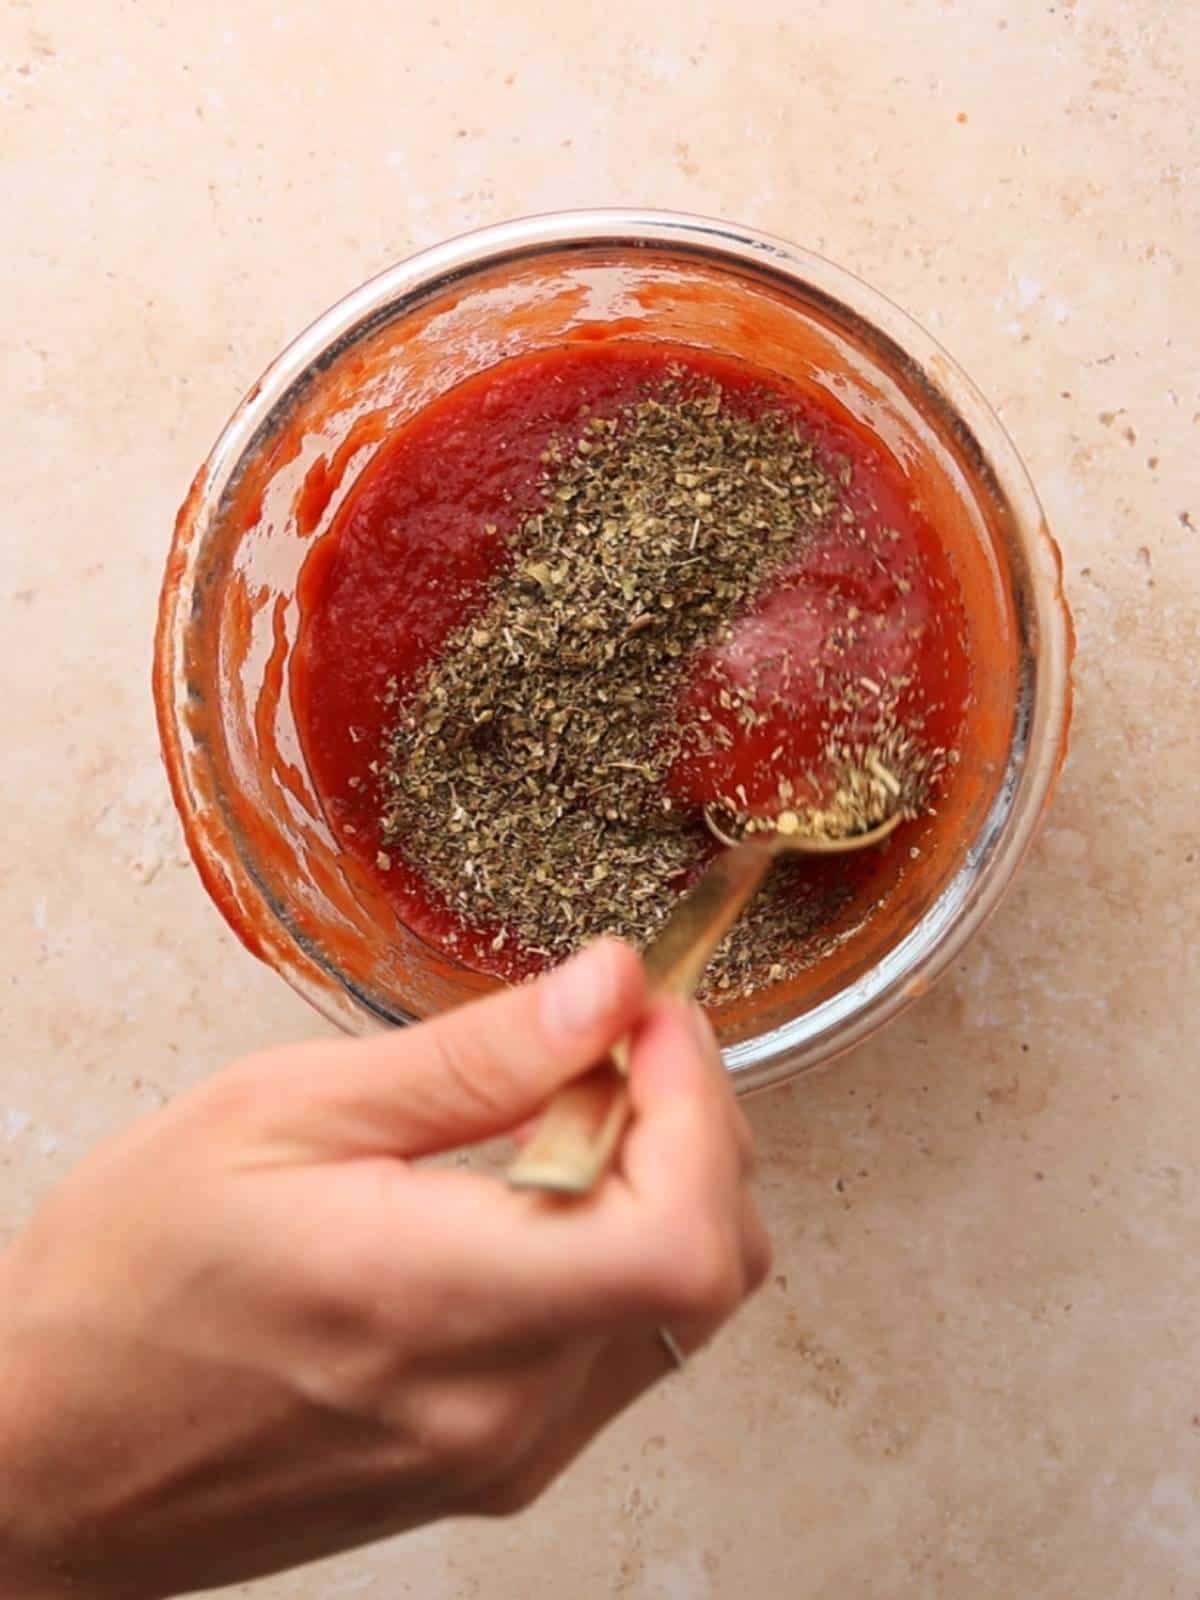 Mixing Italian herbs with tomato sauce.